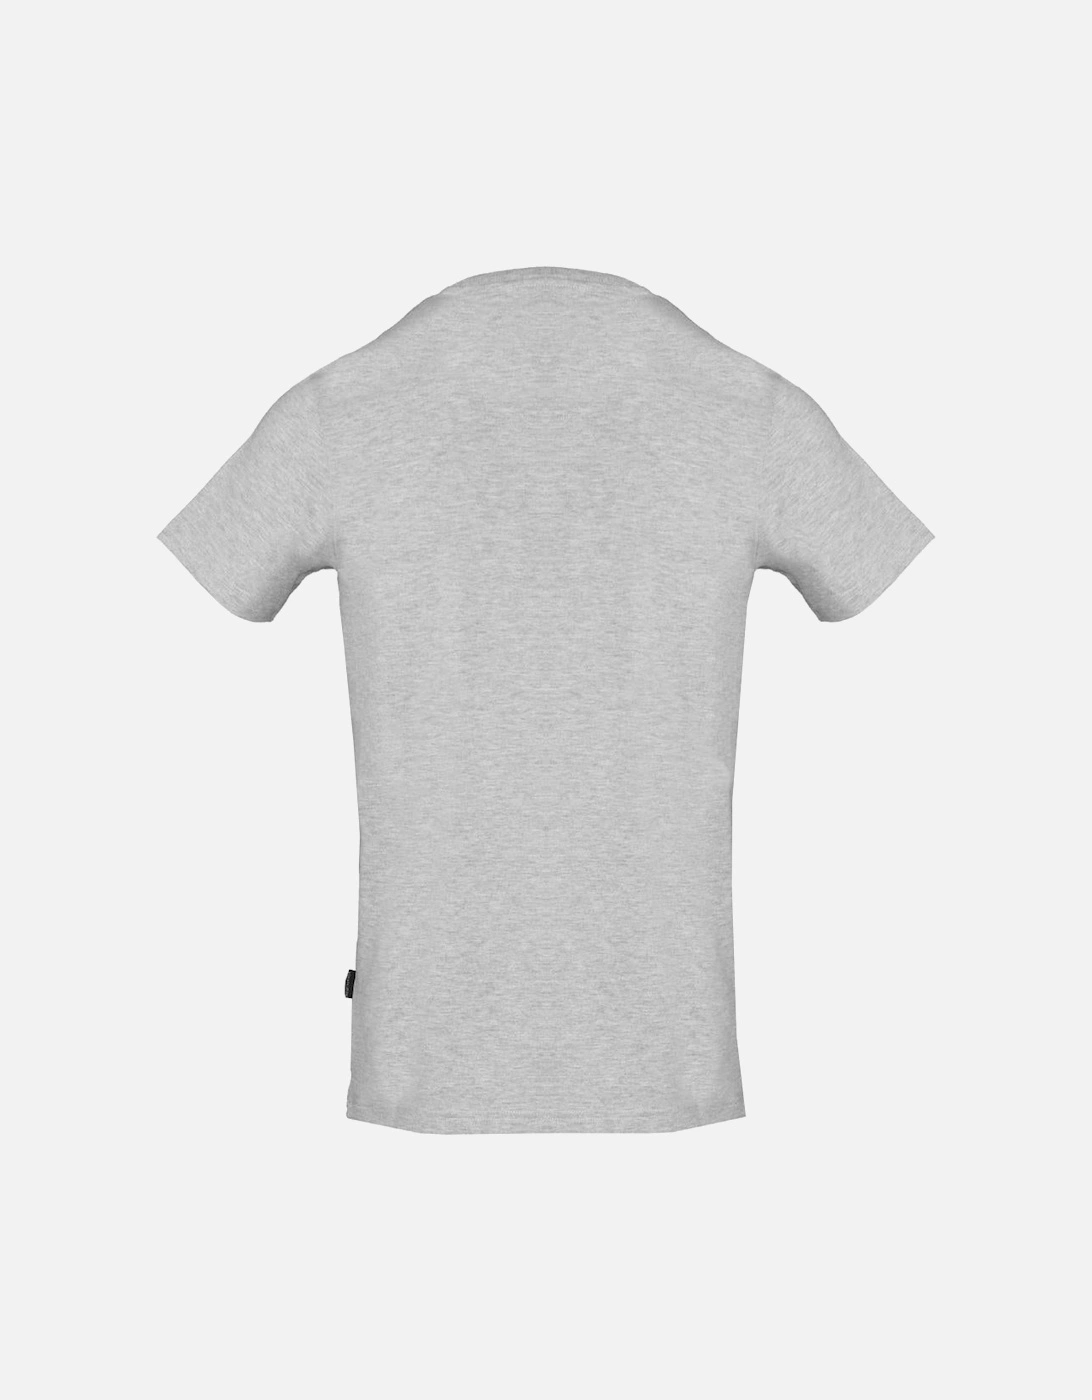 Stitched Aldis Logo Grey T-Shirt